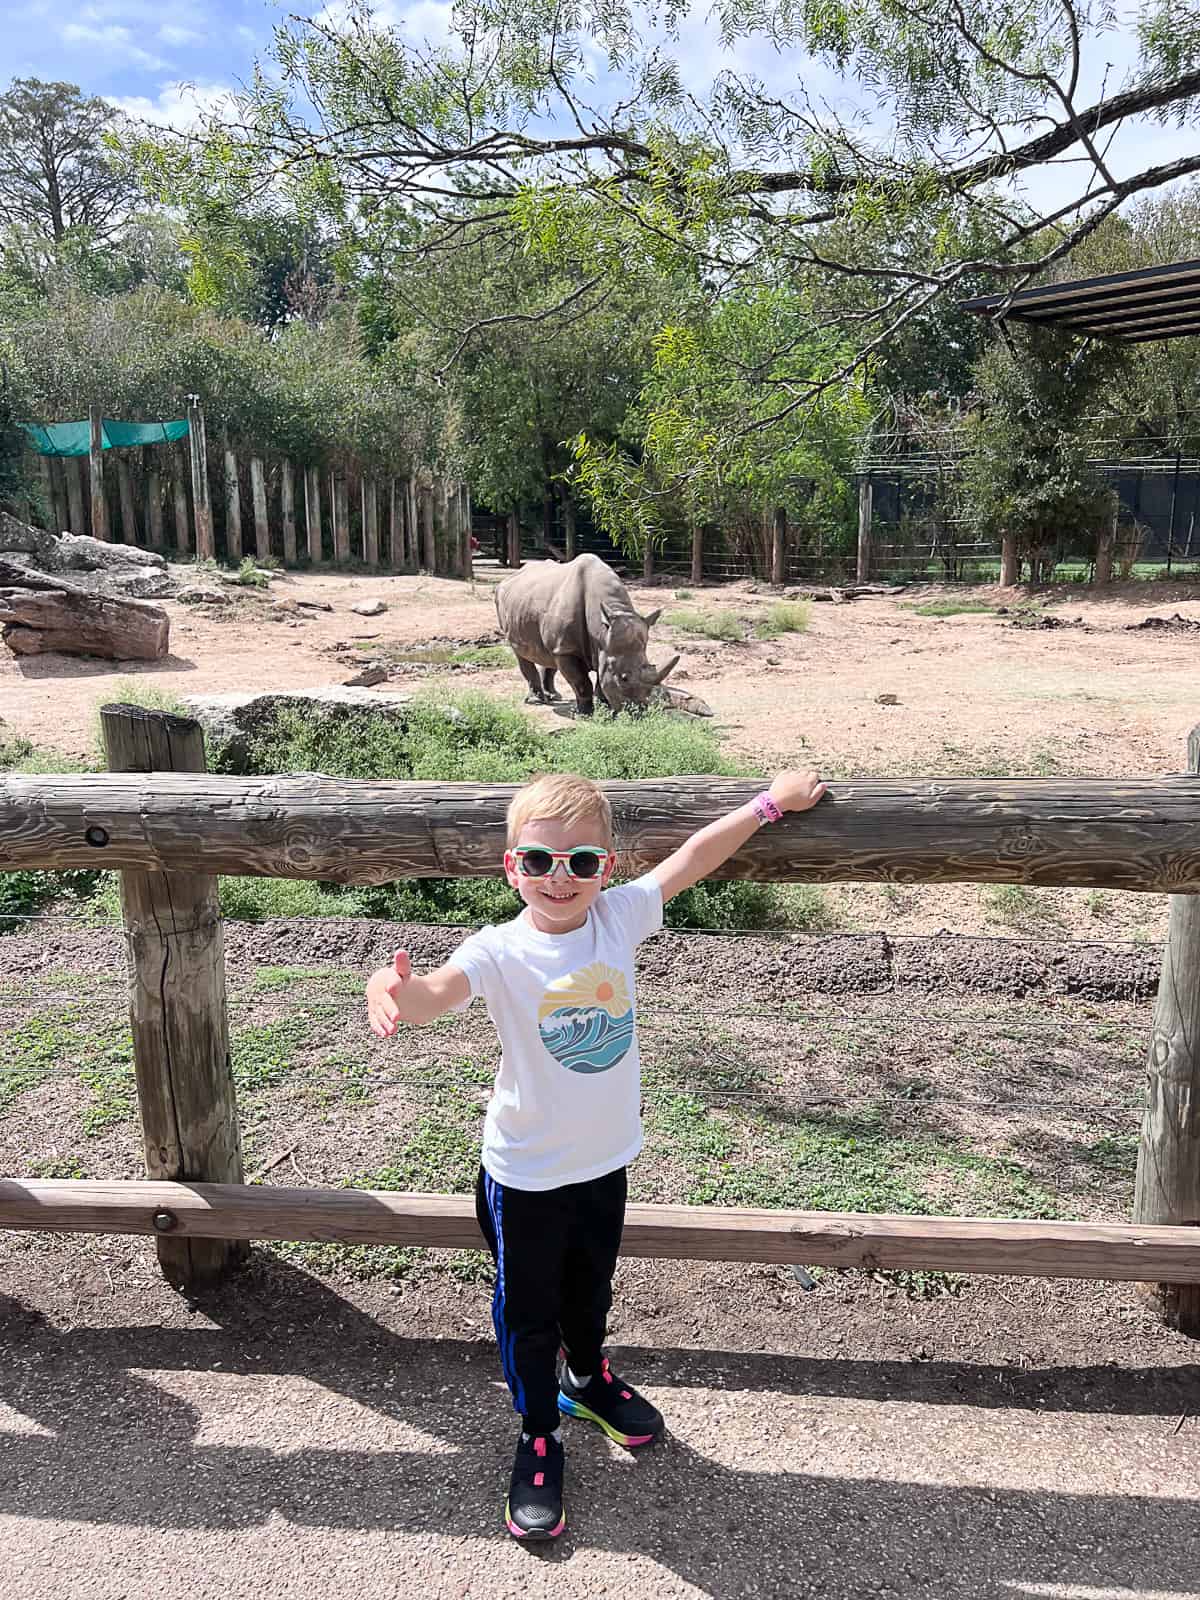 Family Friendly Activity Visiting Cameron Park Zoo in Waco TX